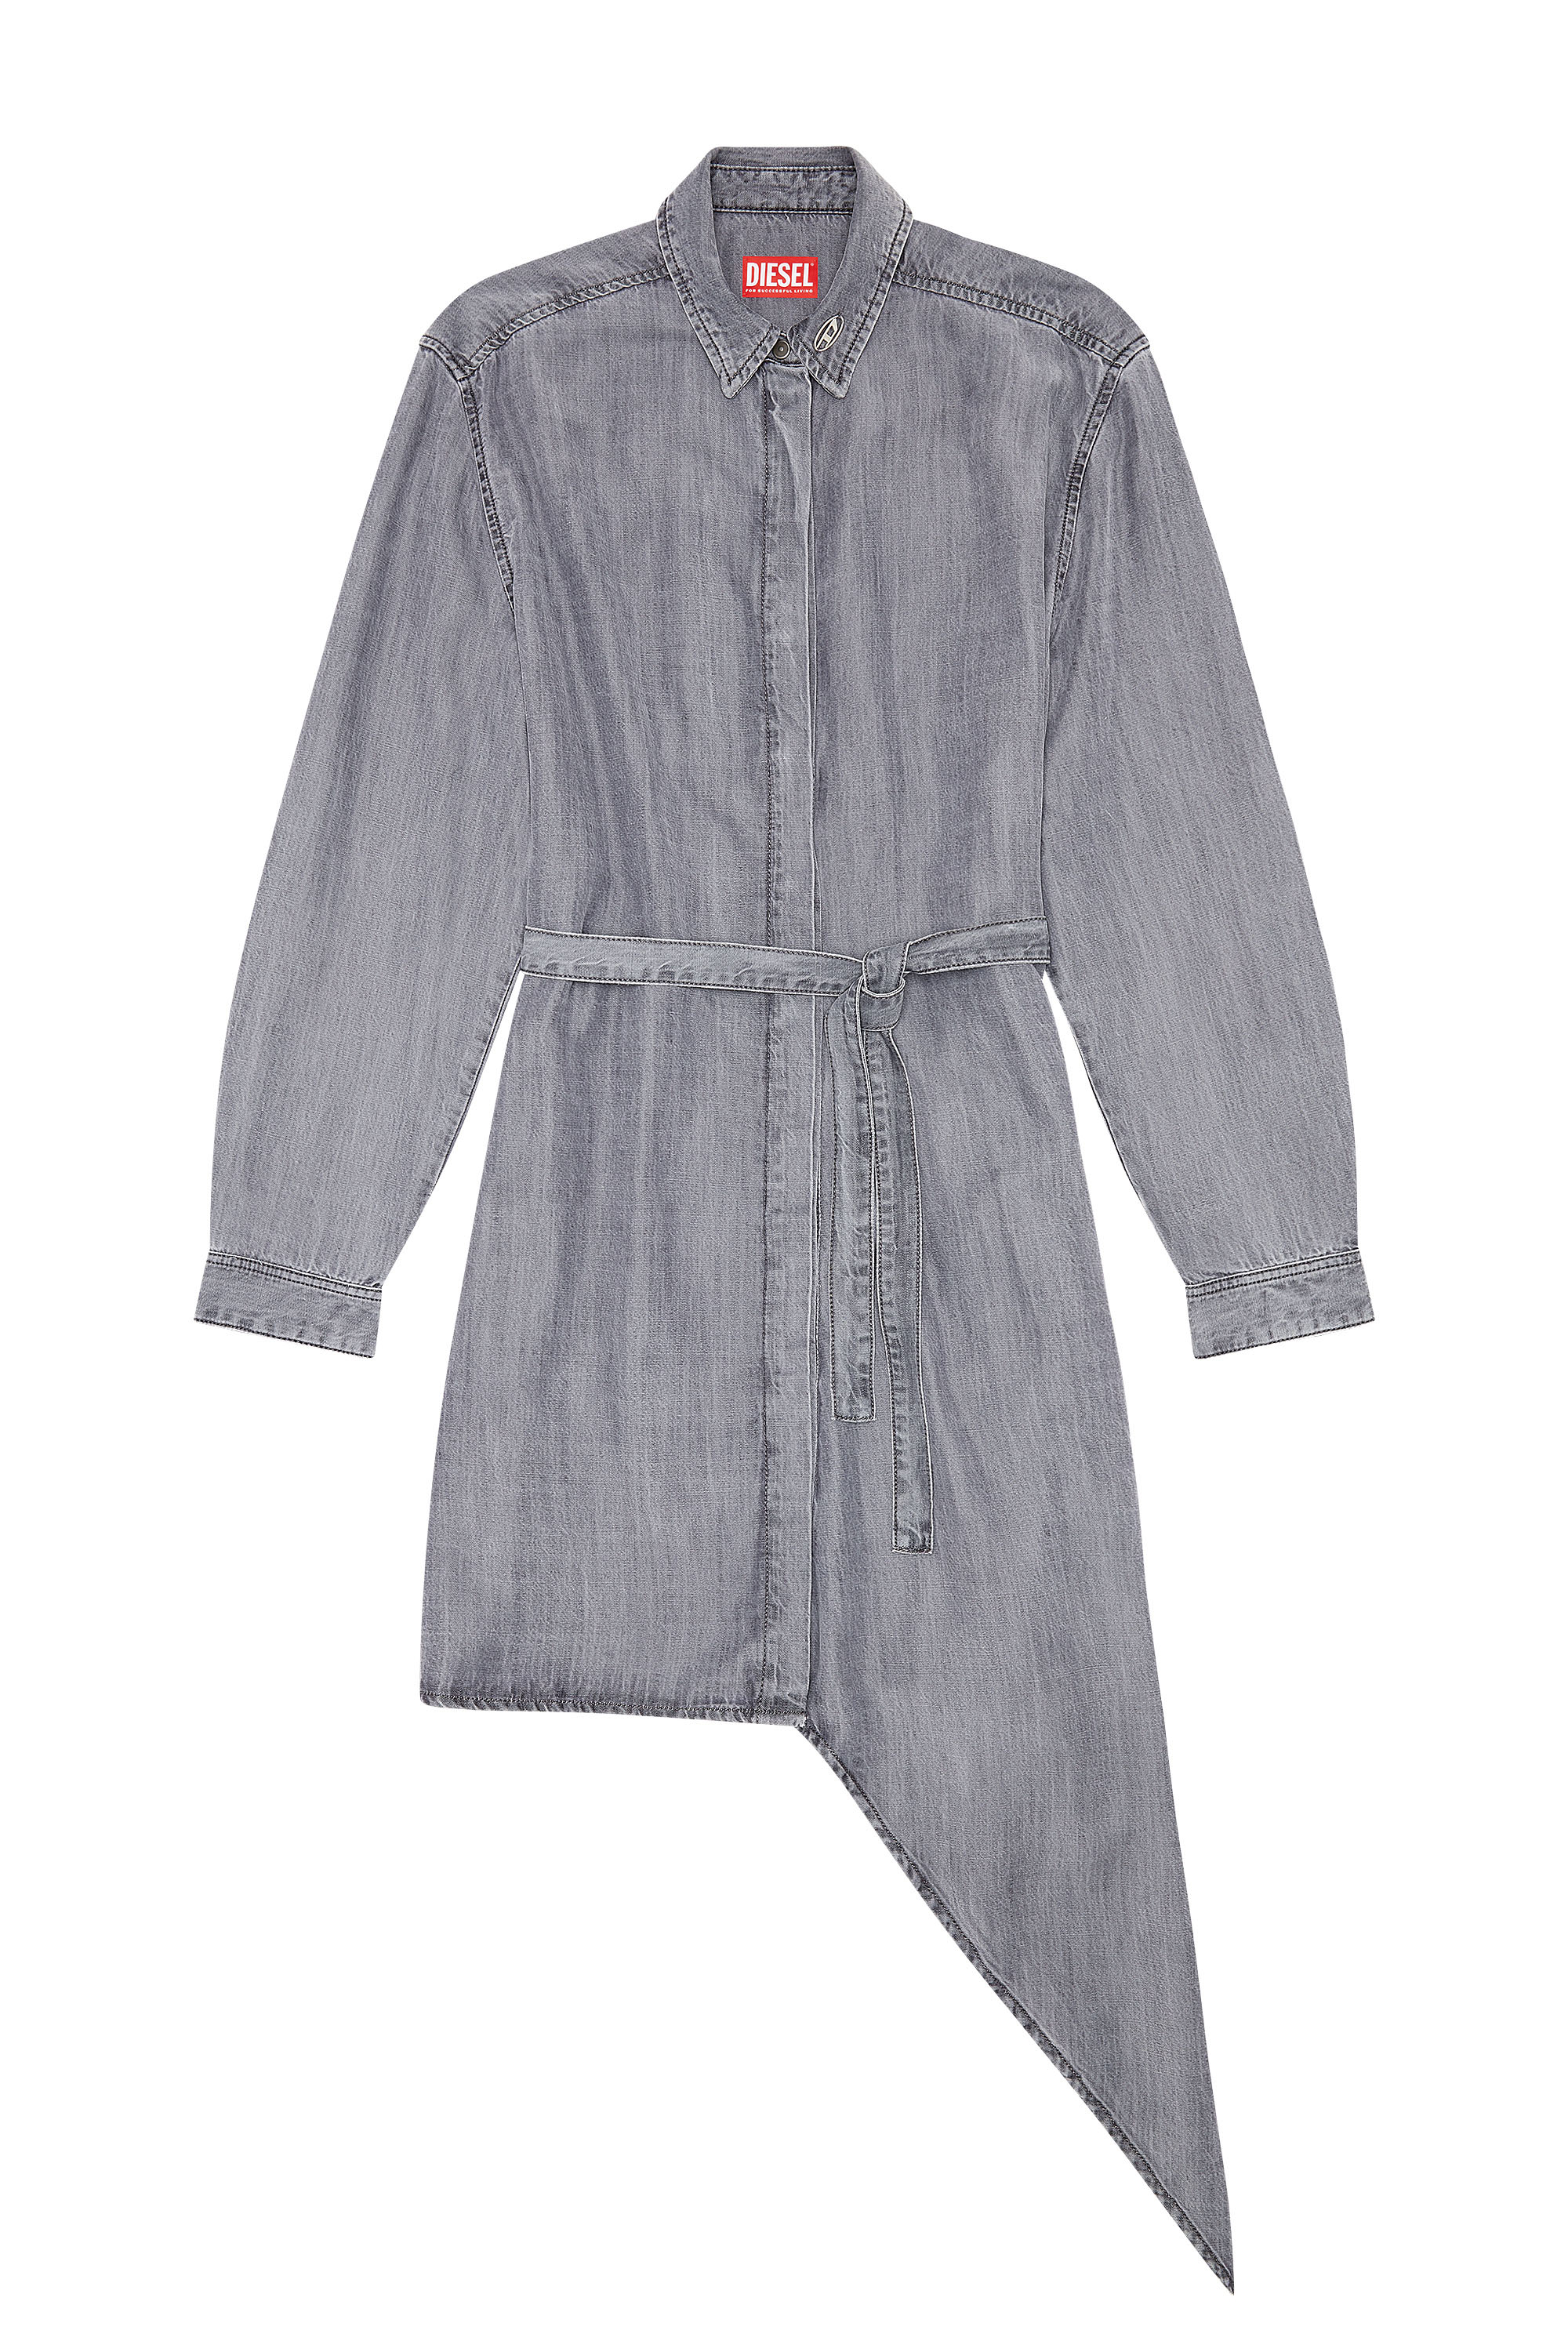 Diesel - DE-TRISS, Femme Robe chemise en denim léger in Gris - Image 5